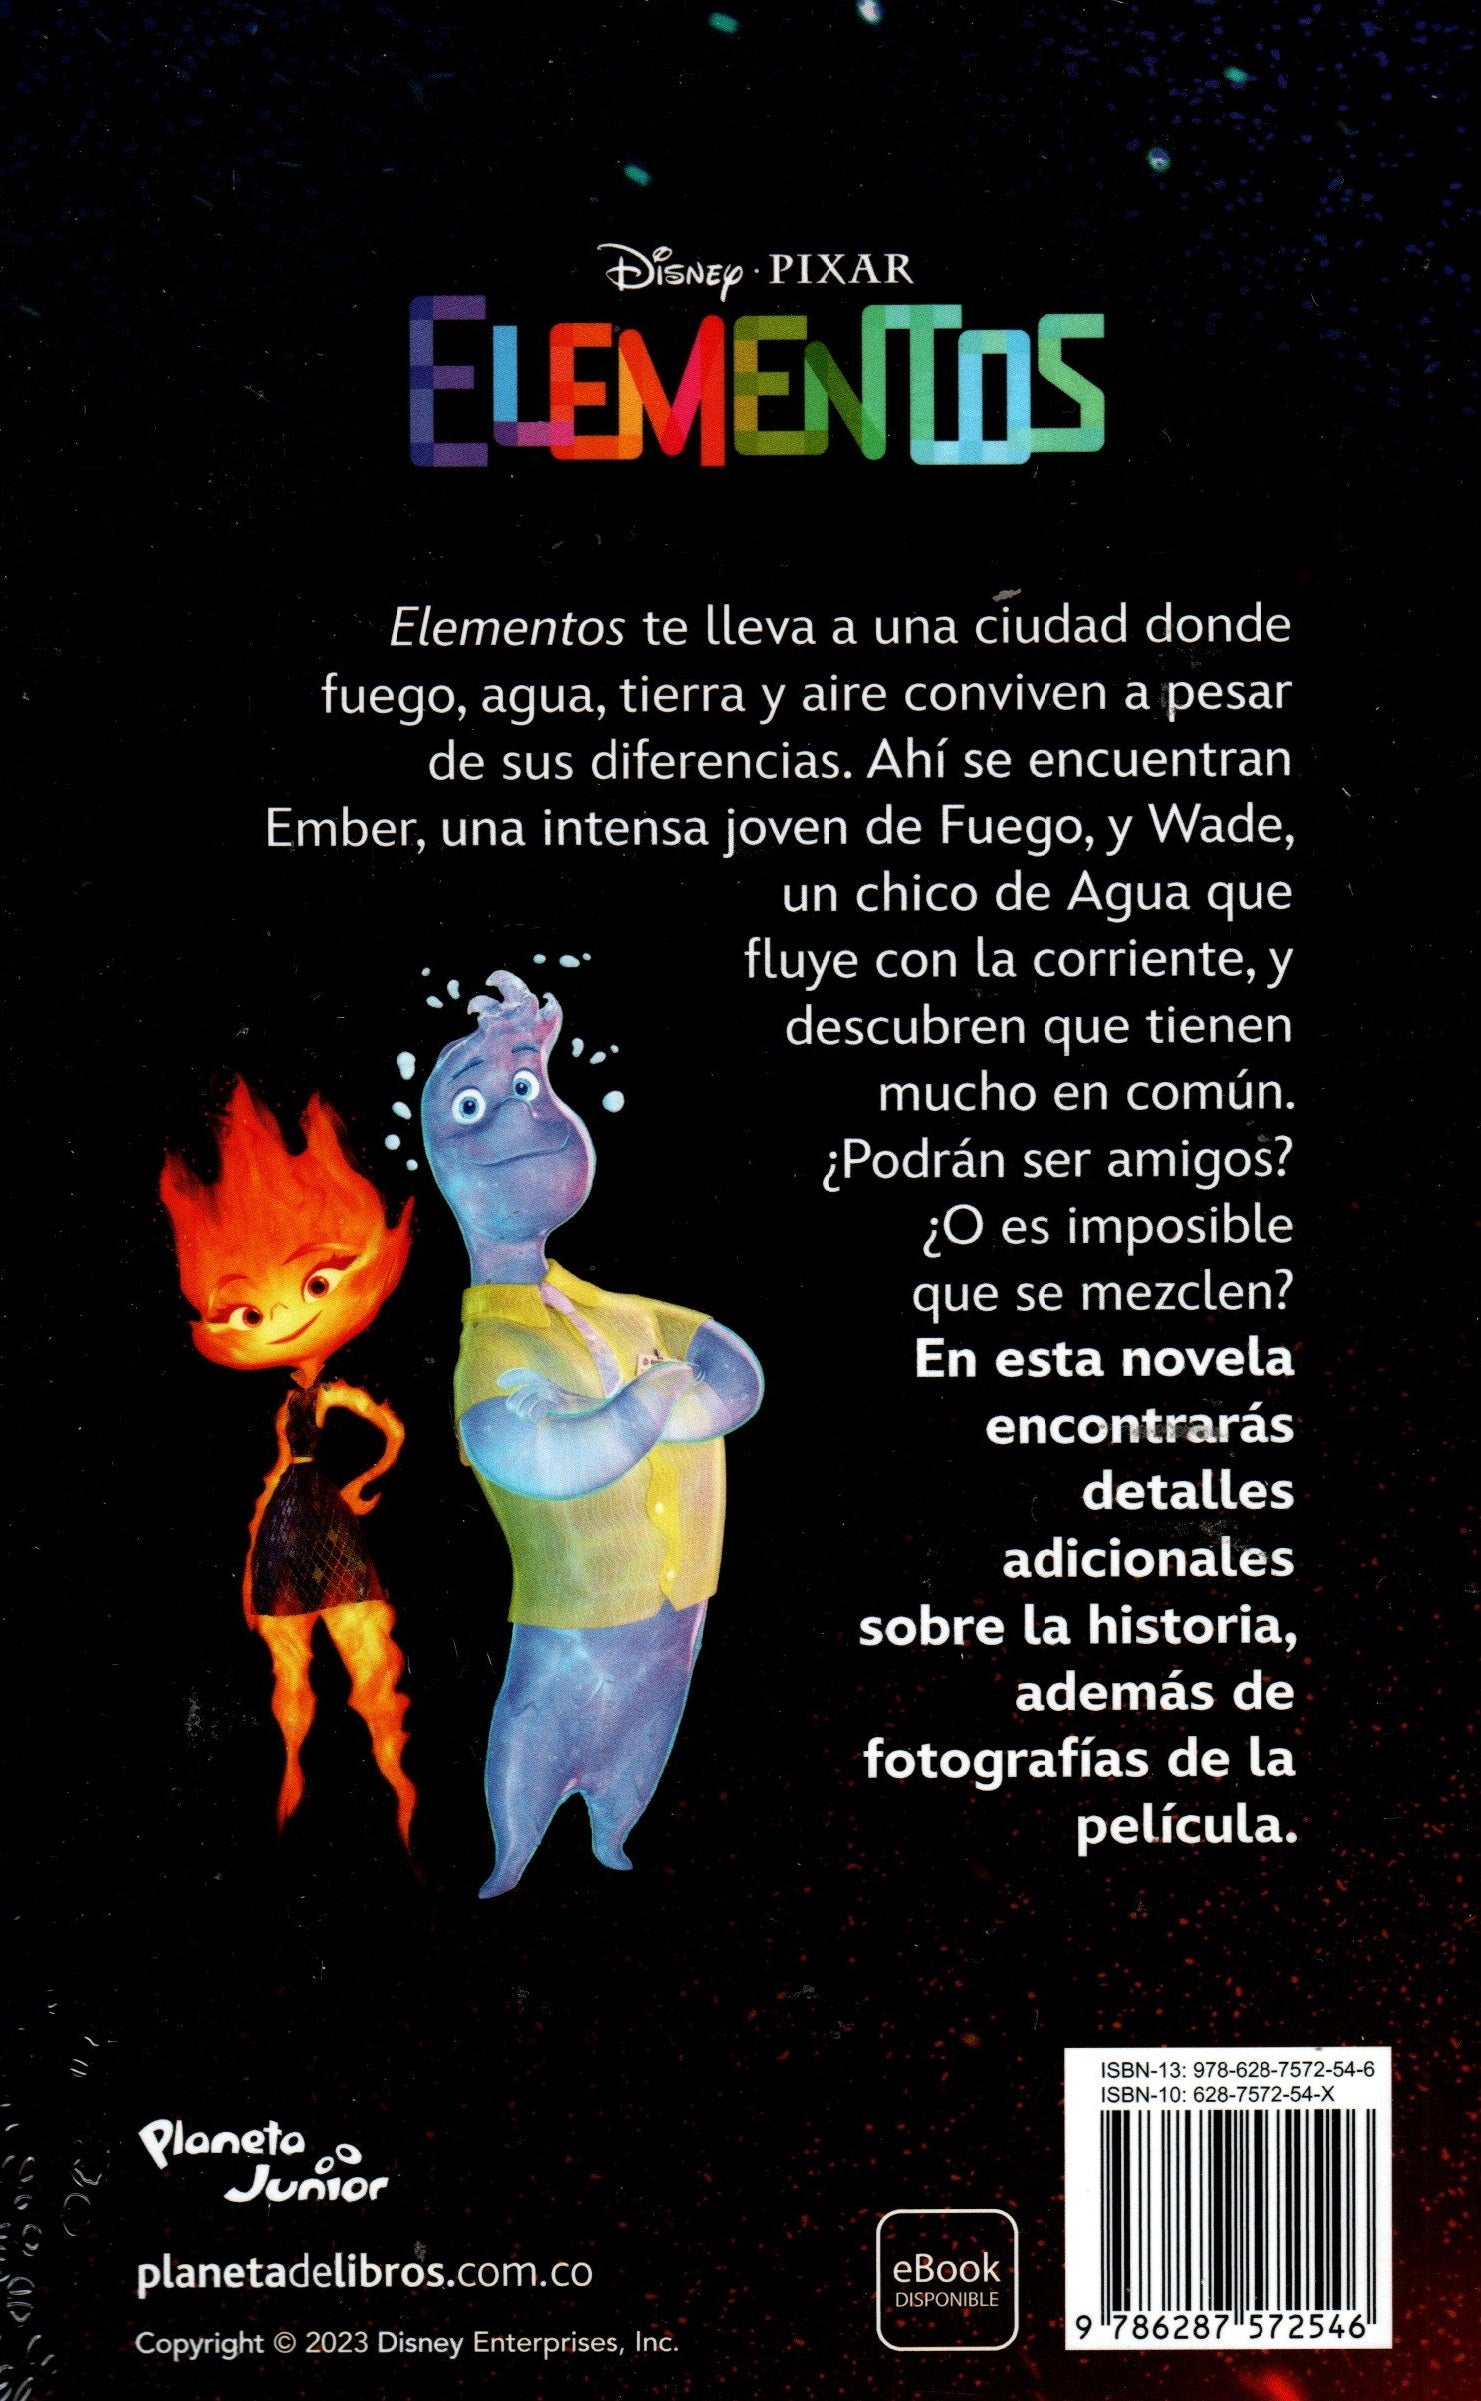 Libro Disney - Elementos. La novela